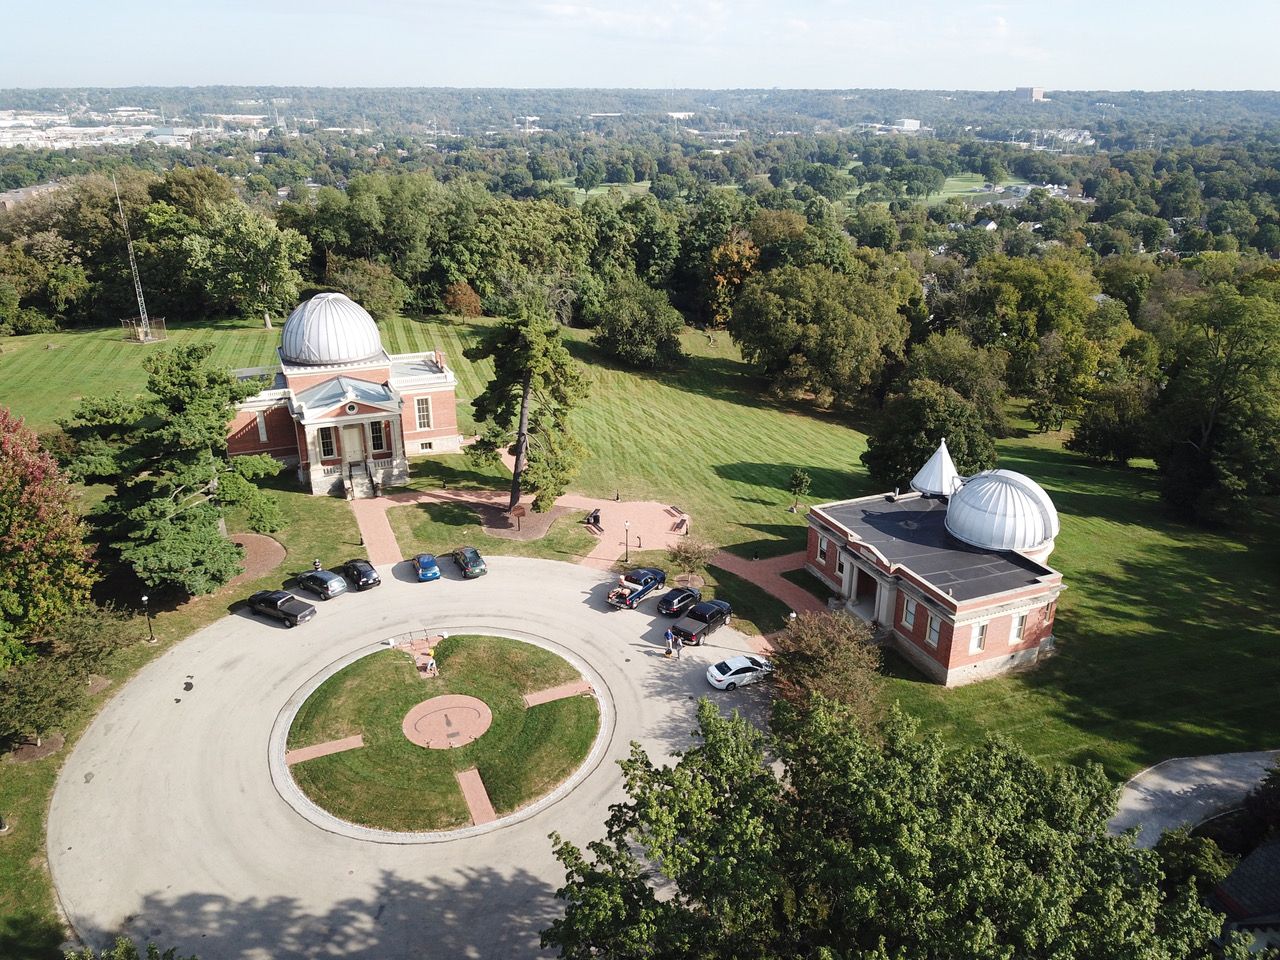 Historic Cincinnati Observatory remains astronomy ‘star’